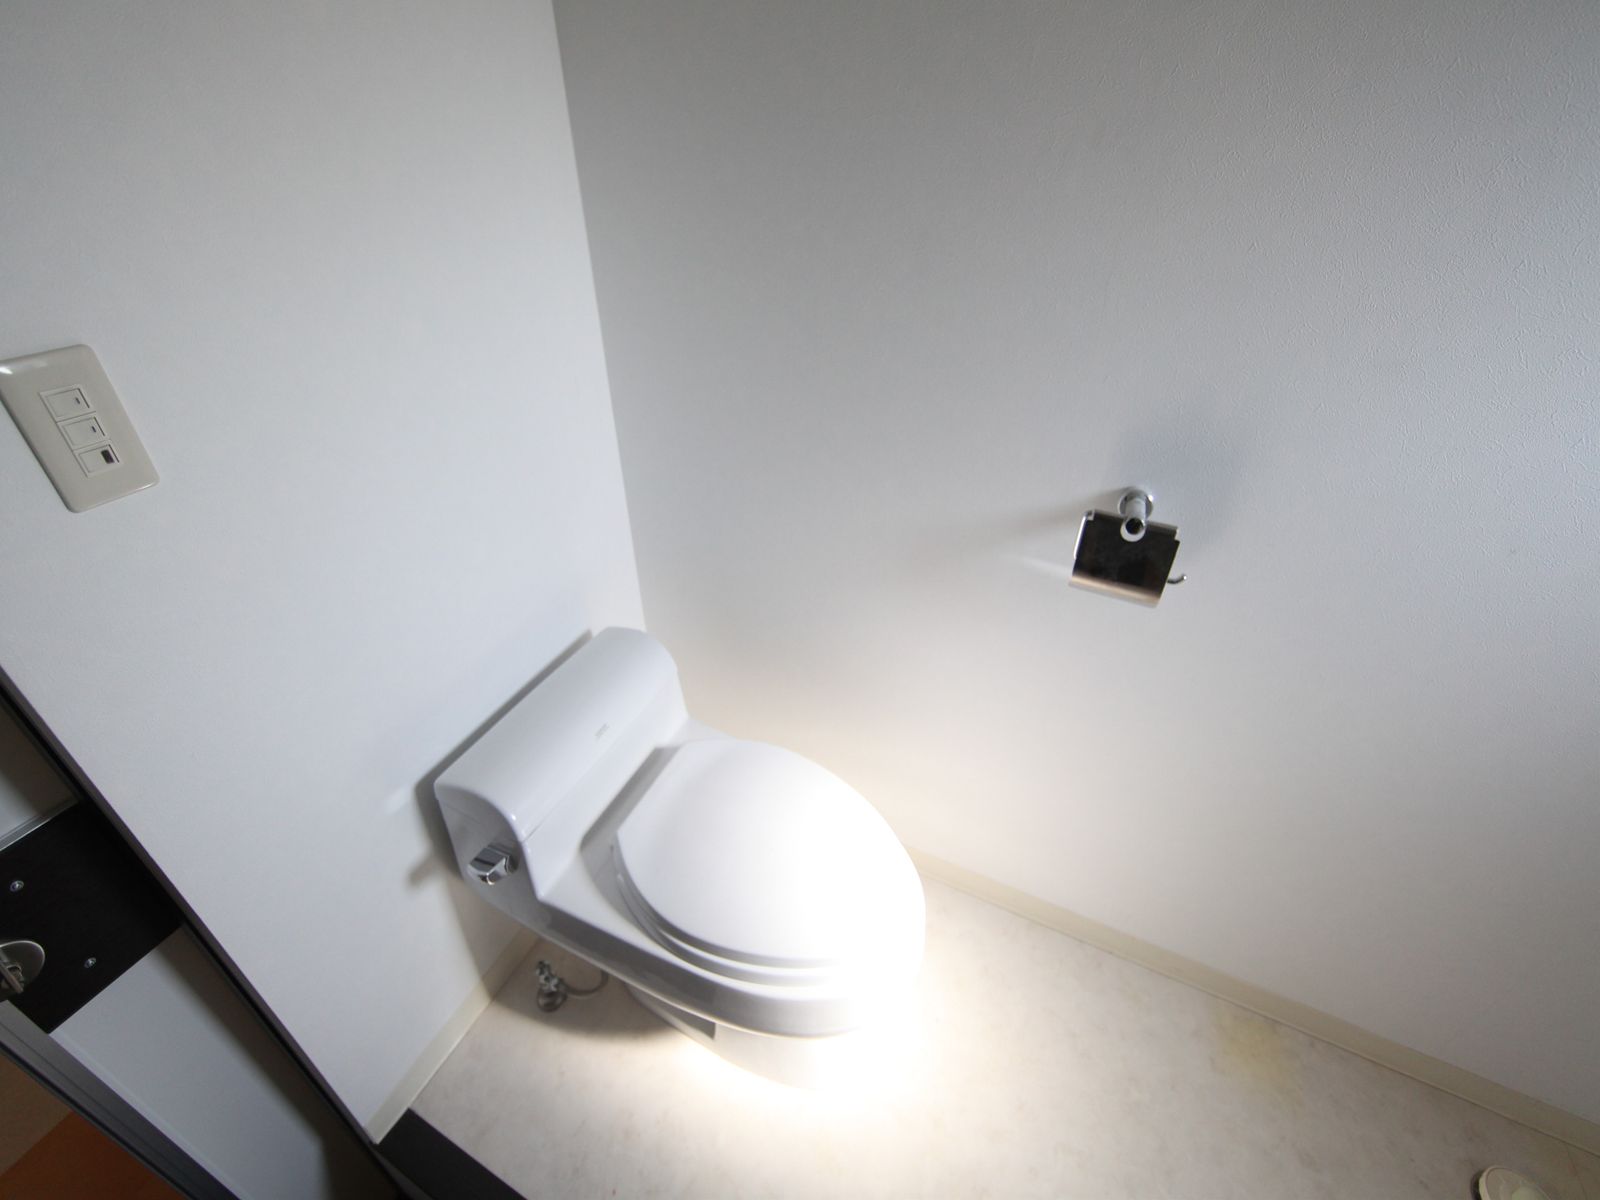 Toilet. toilet Warm water washing heating toilet seat installation Allowed